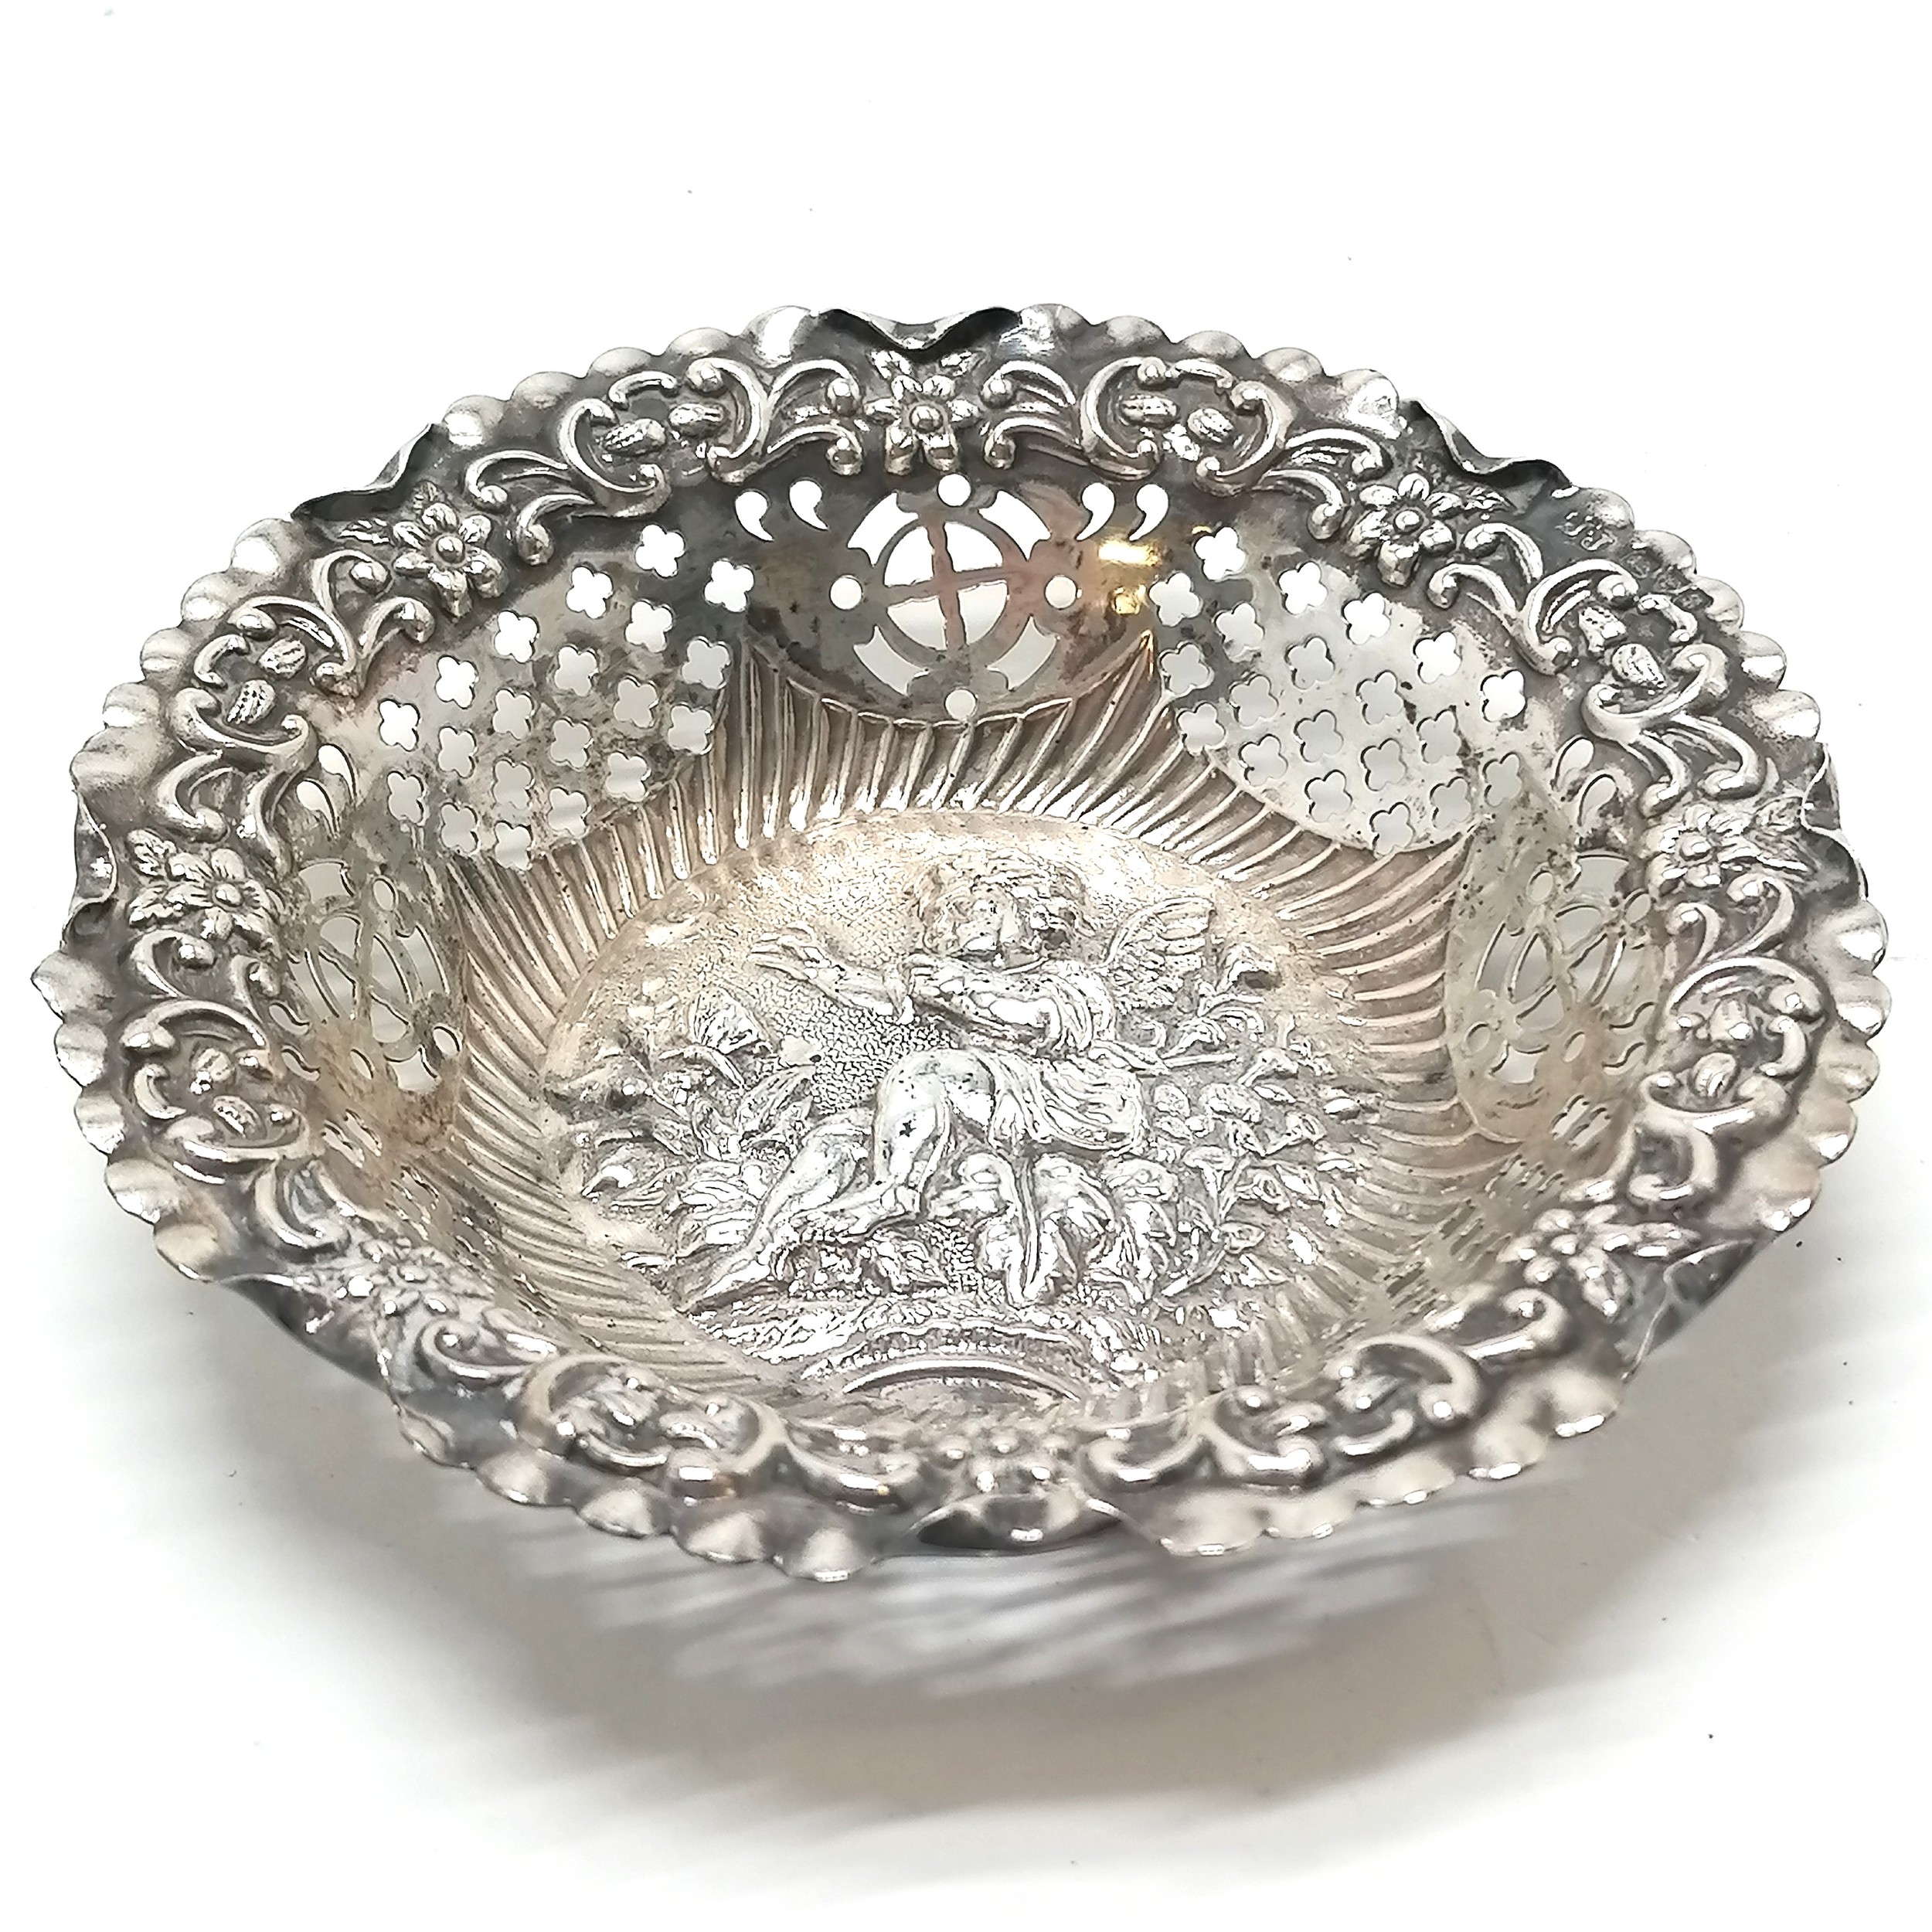 1902 Chester silver pierced bonbon dish with cherub detail by Jay, Richard Attenborough & Co -